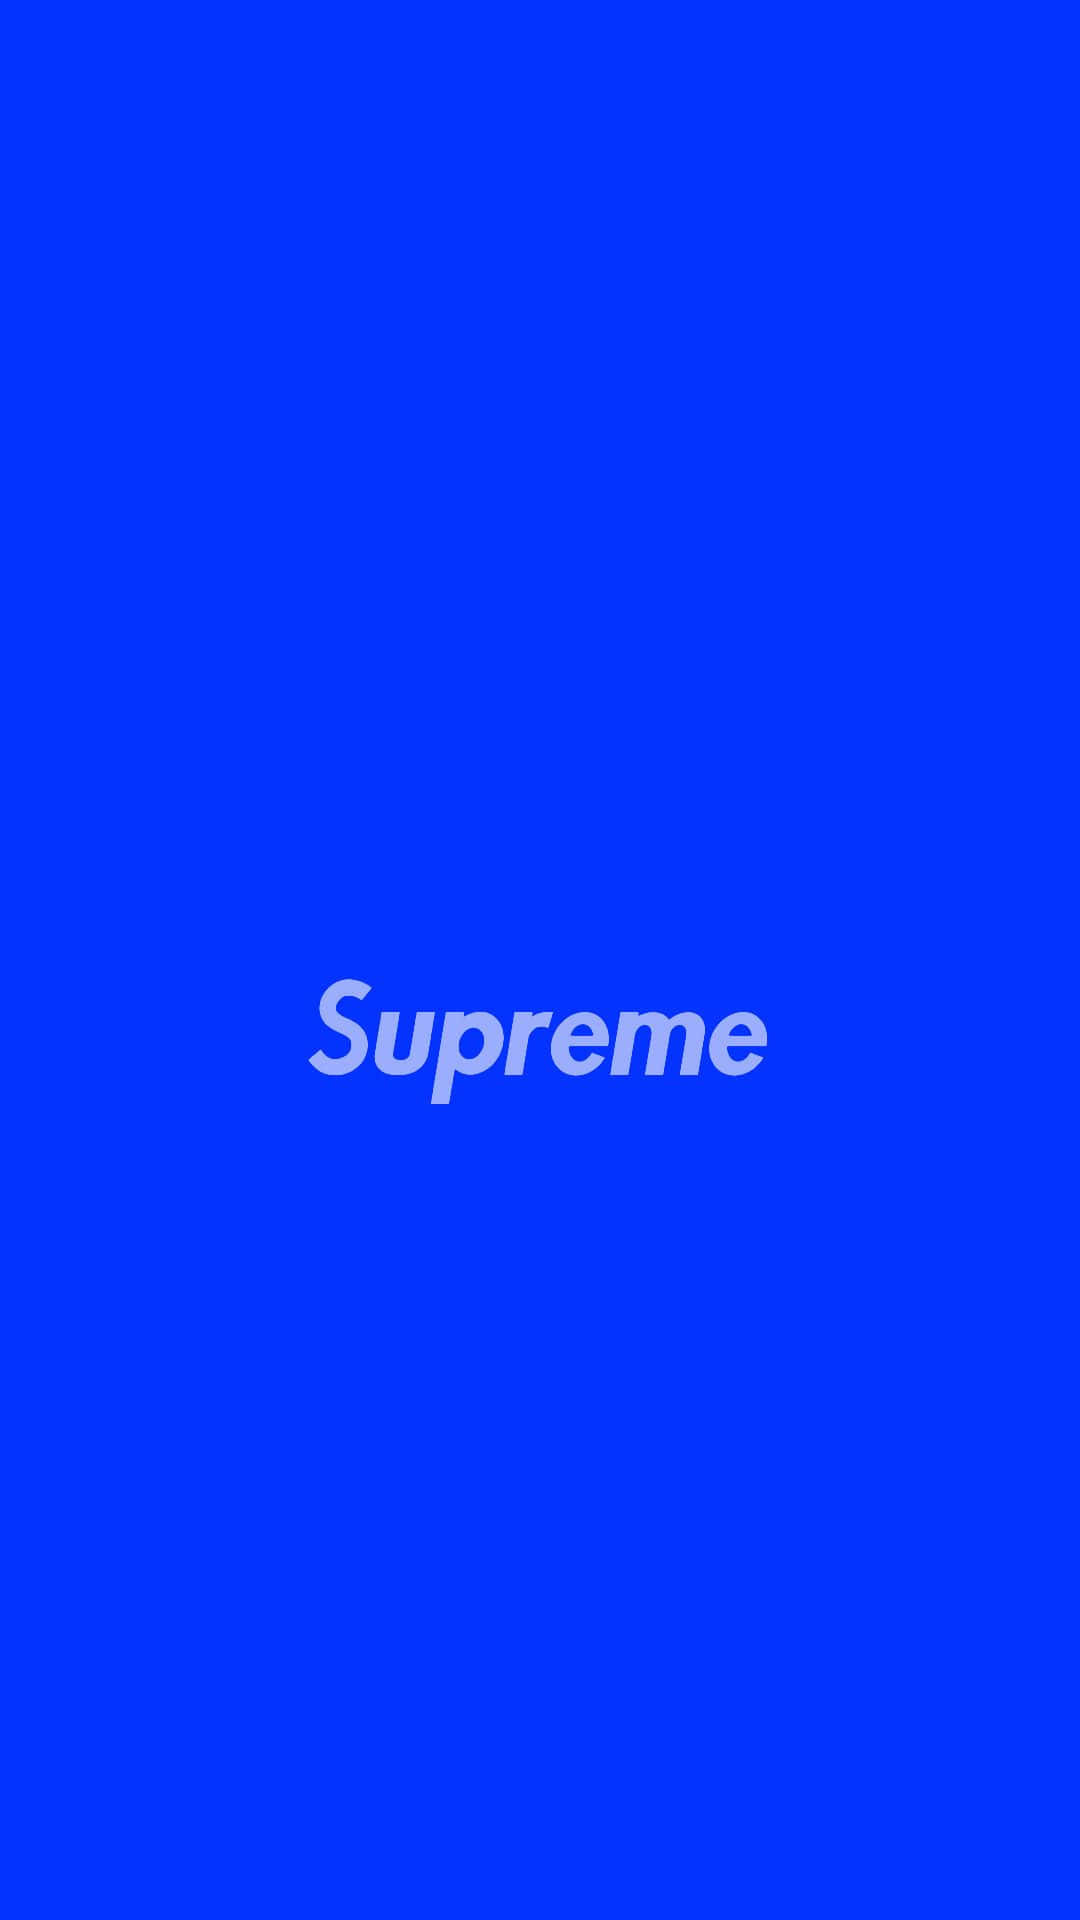 Supreme Logo On A Blue Background Wallpaper